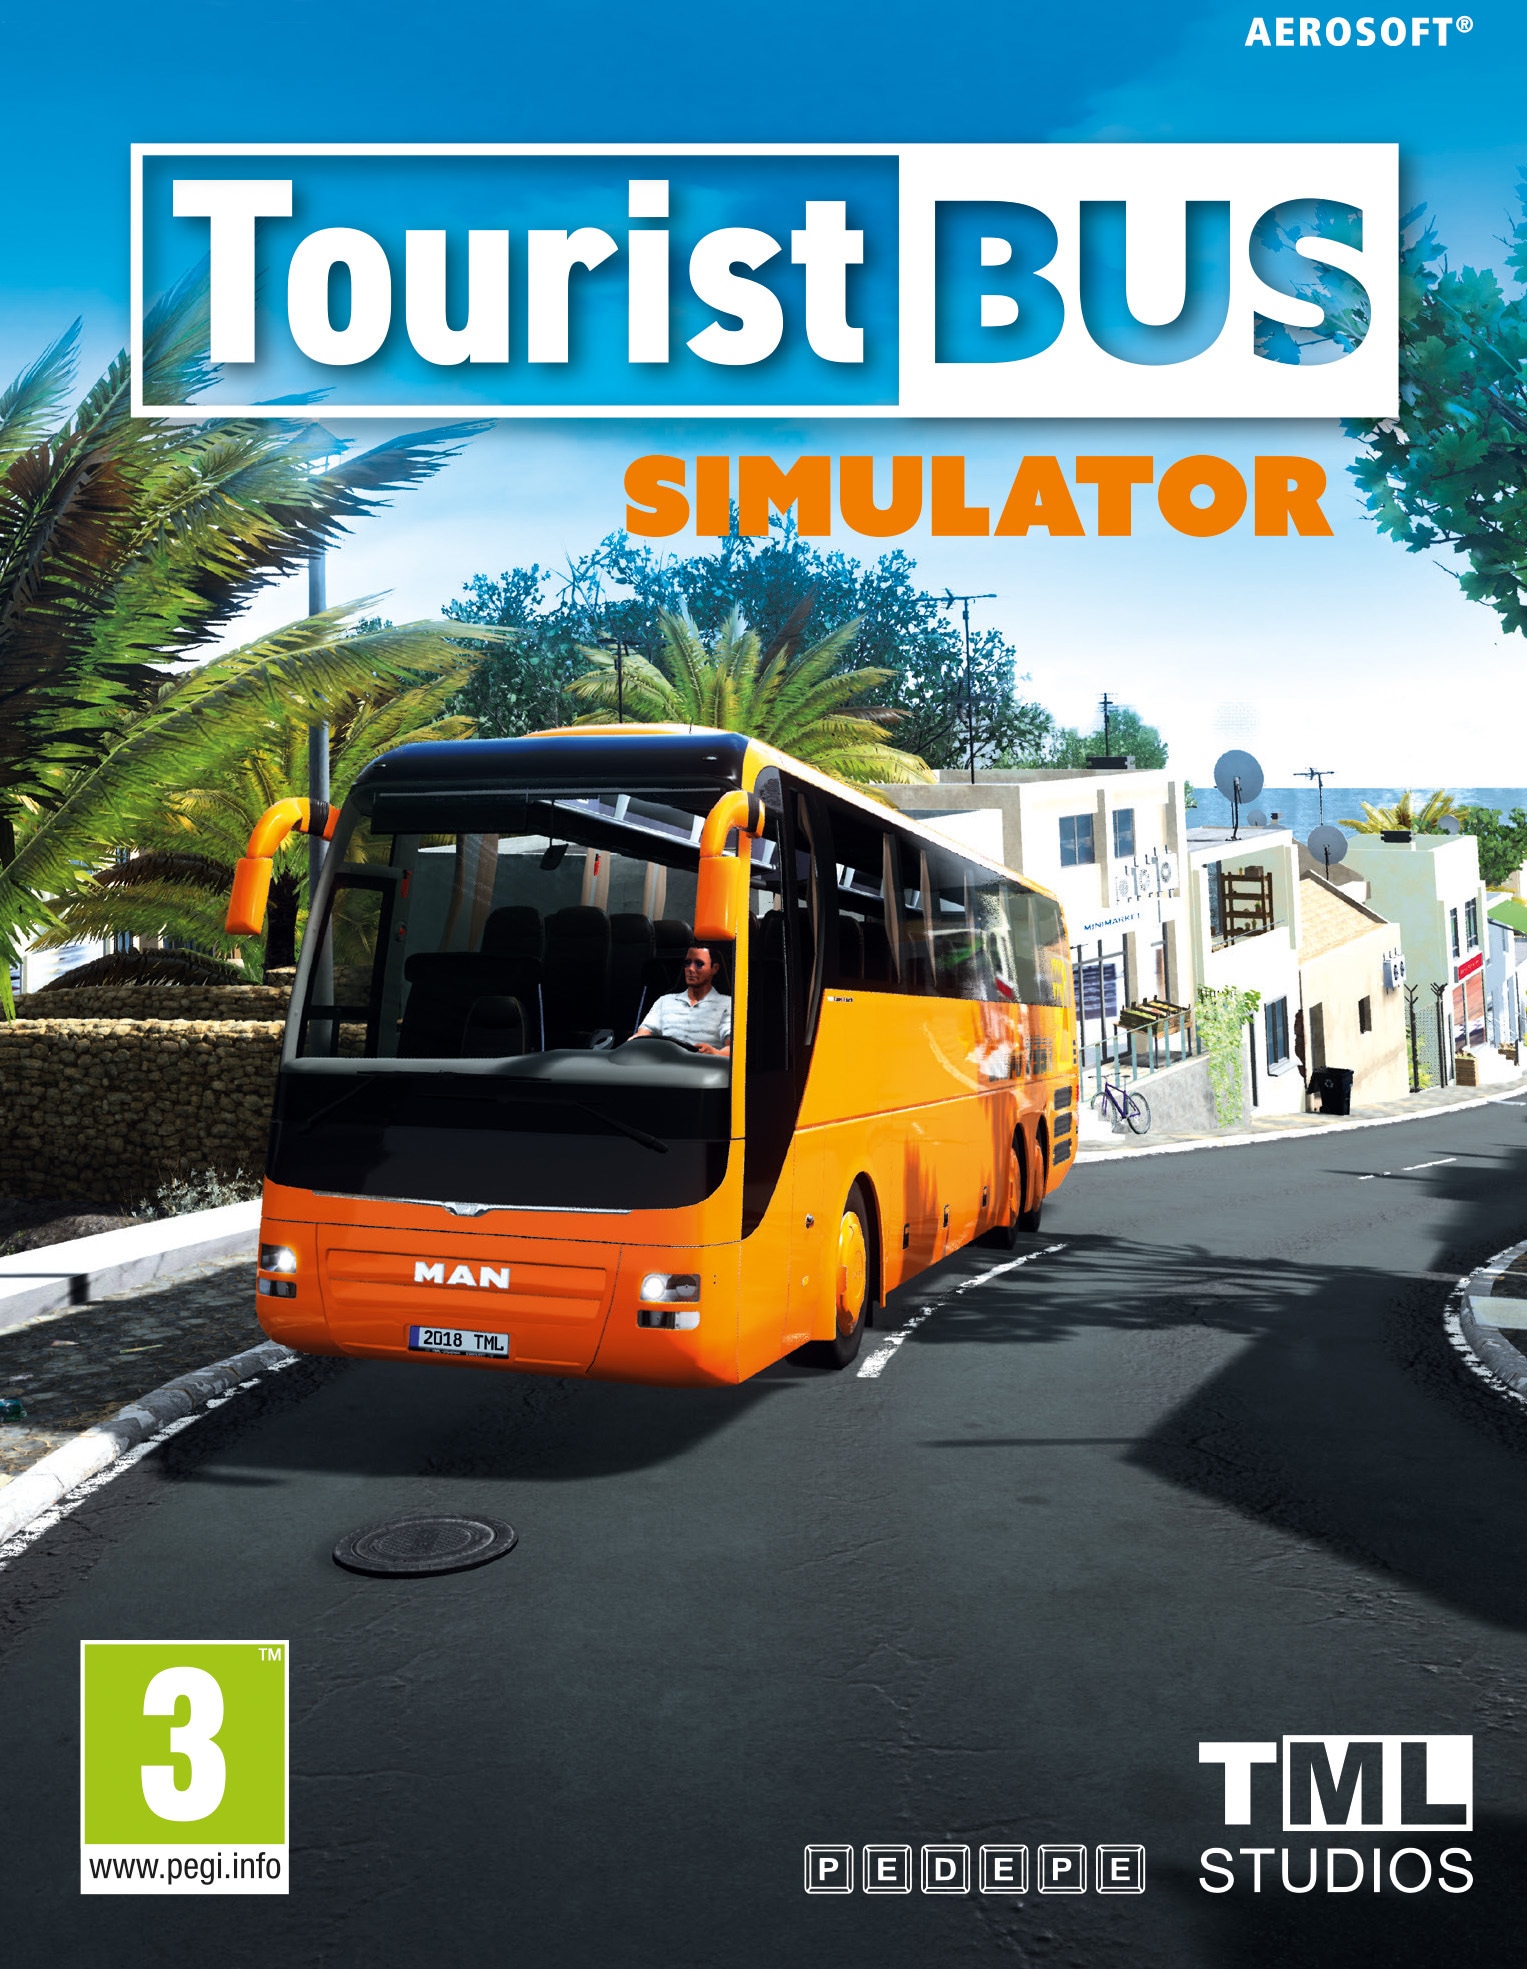 tourist bus simulator download pc free windows 7